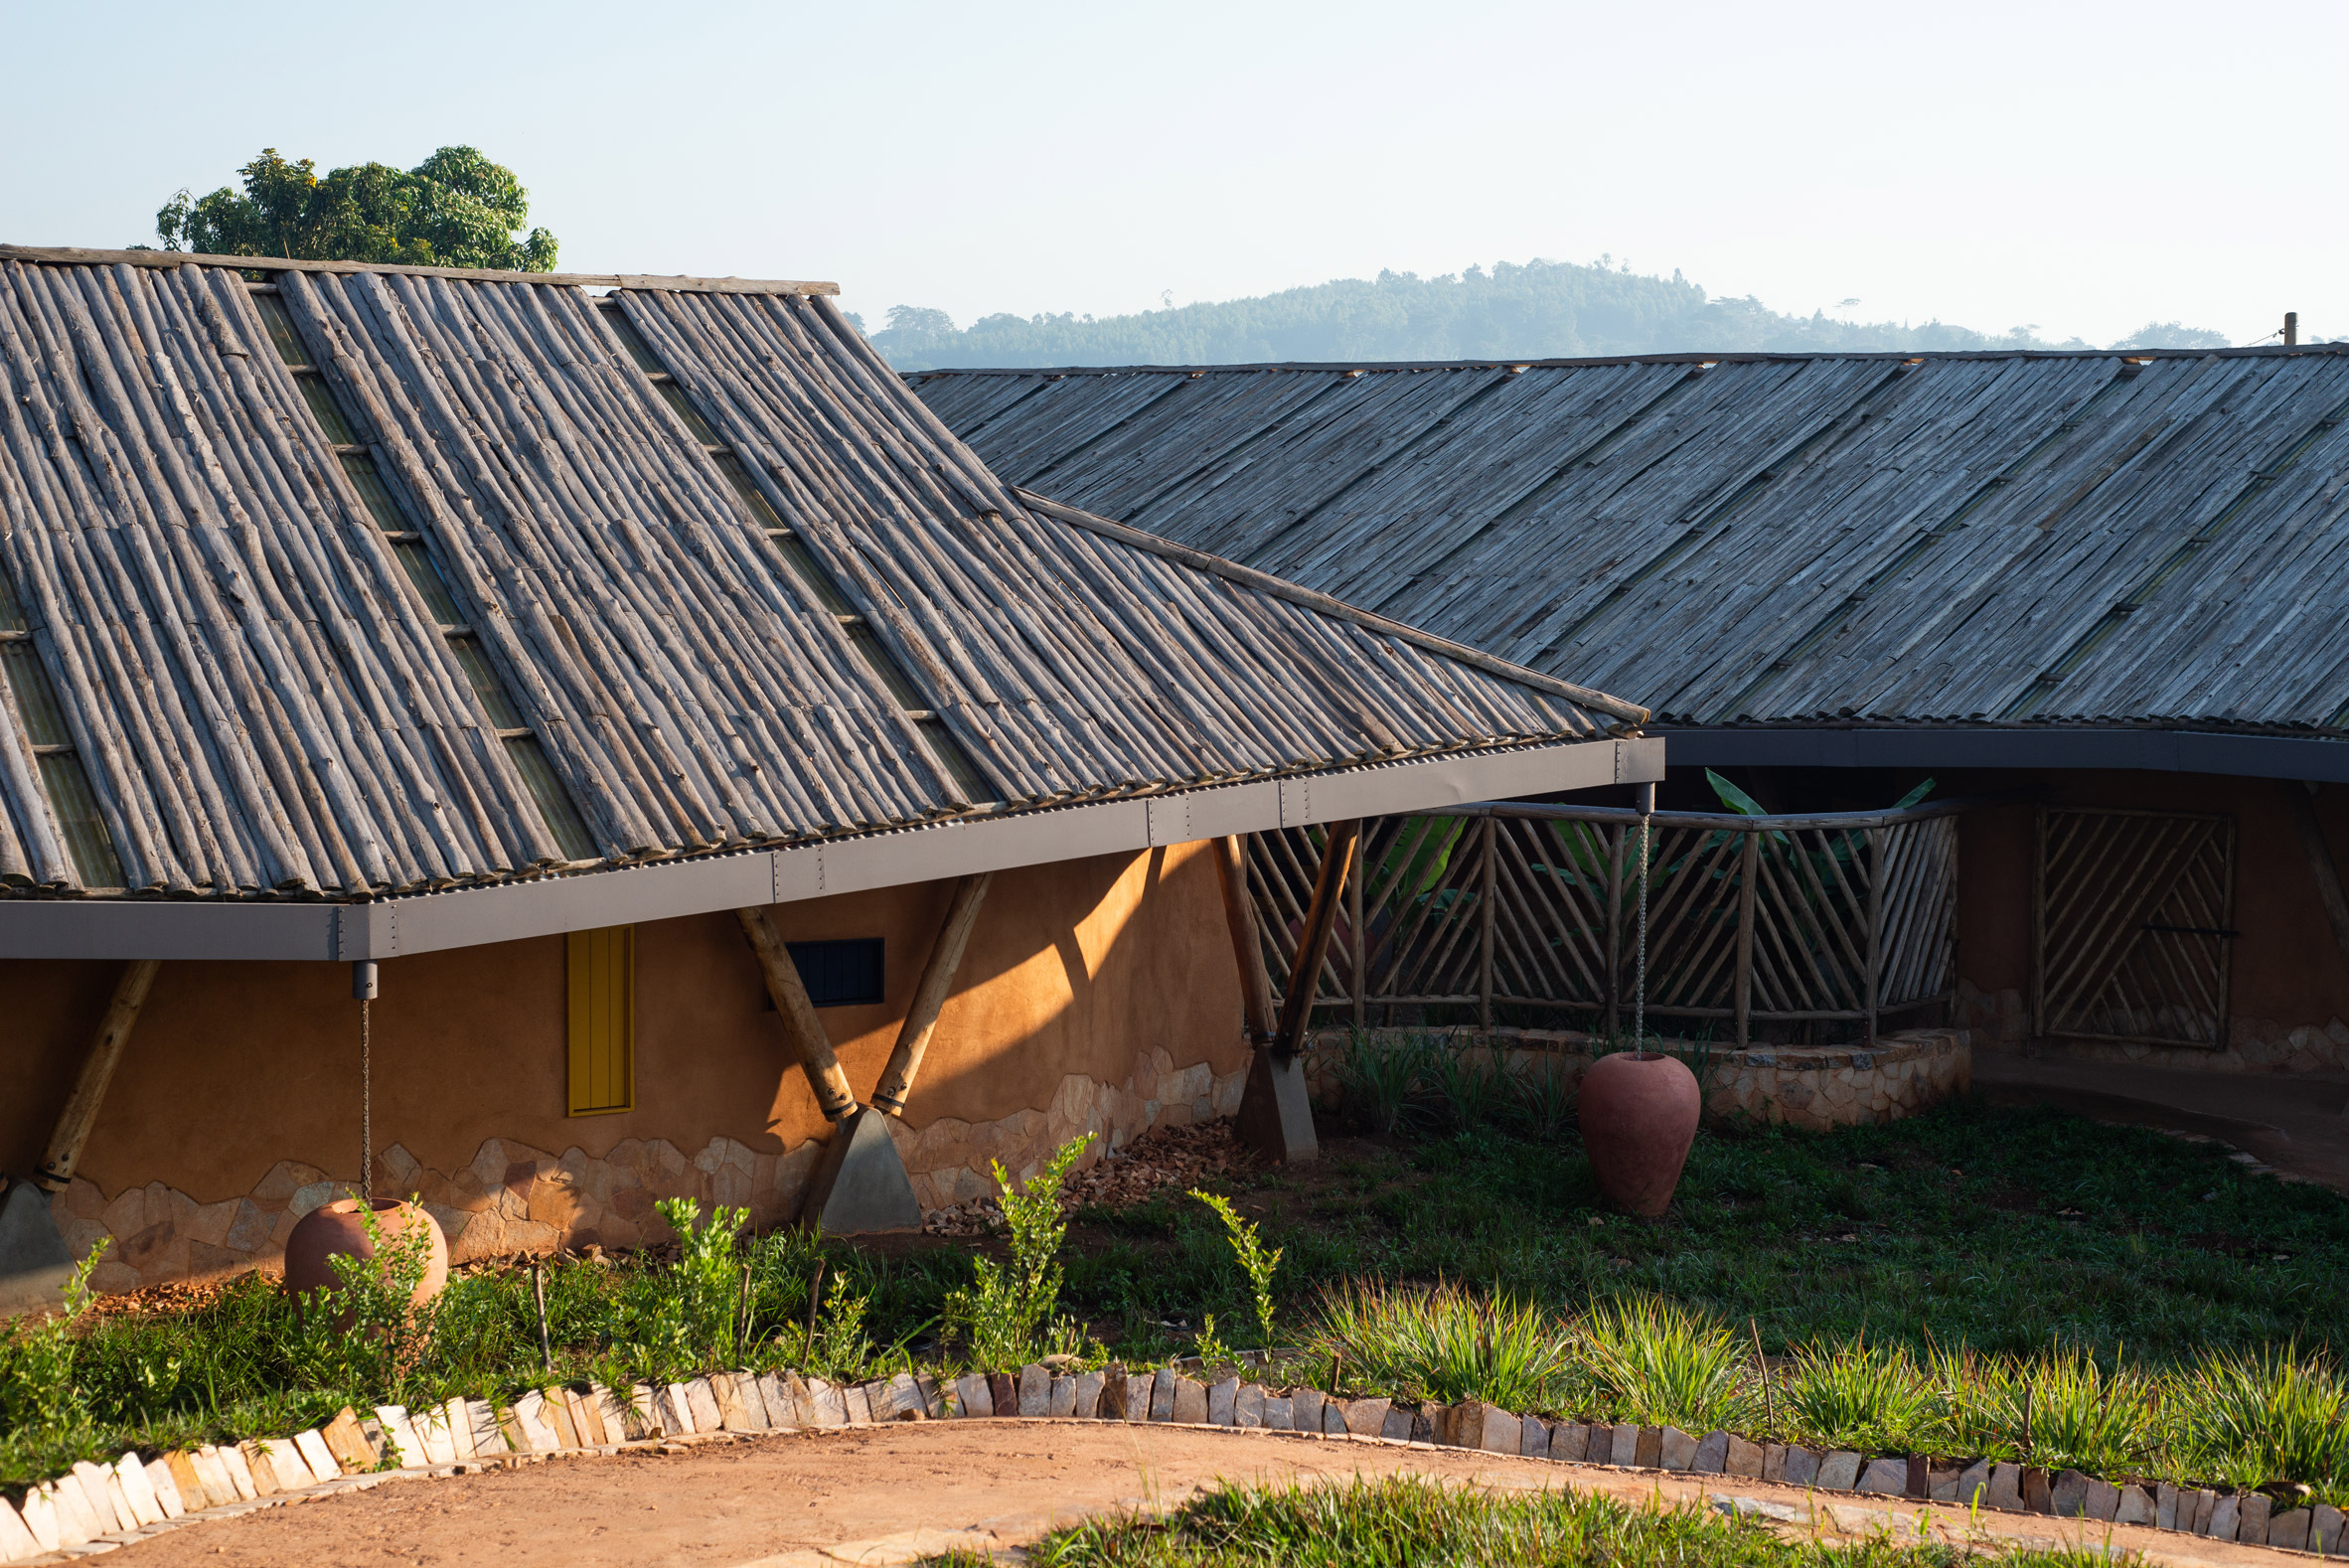 Building in Uganda with eucalyptus-clad roof